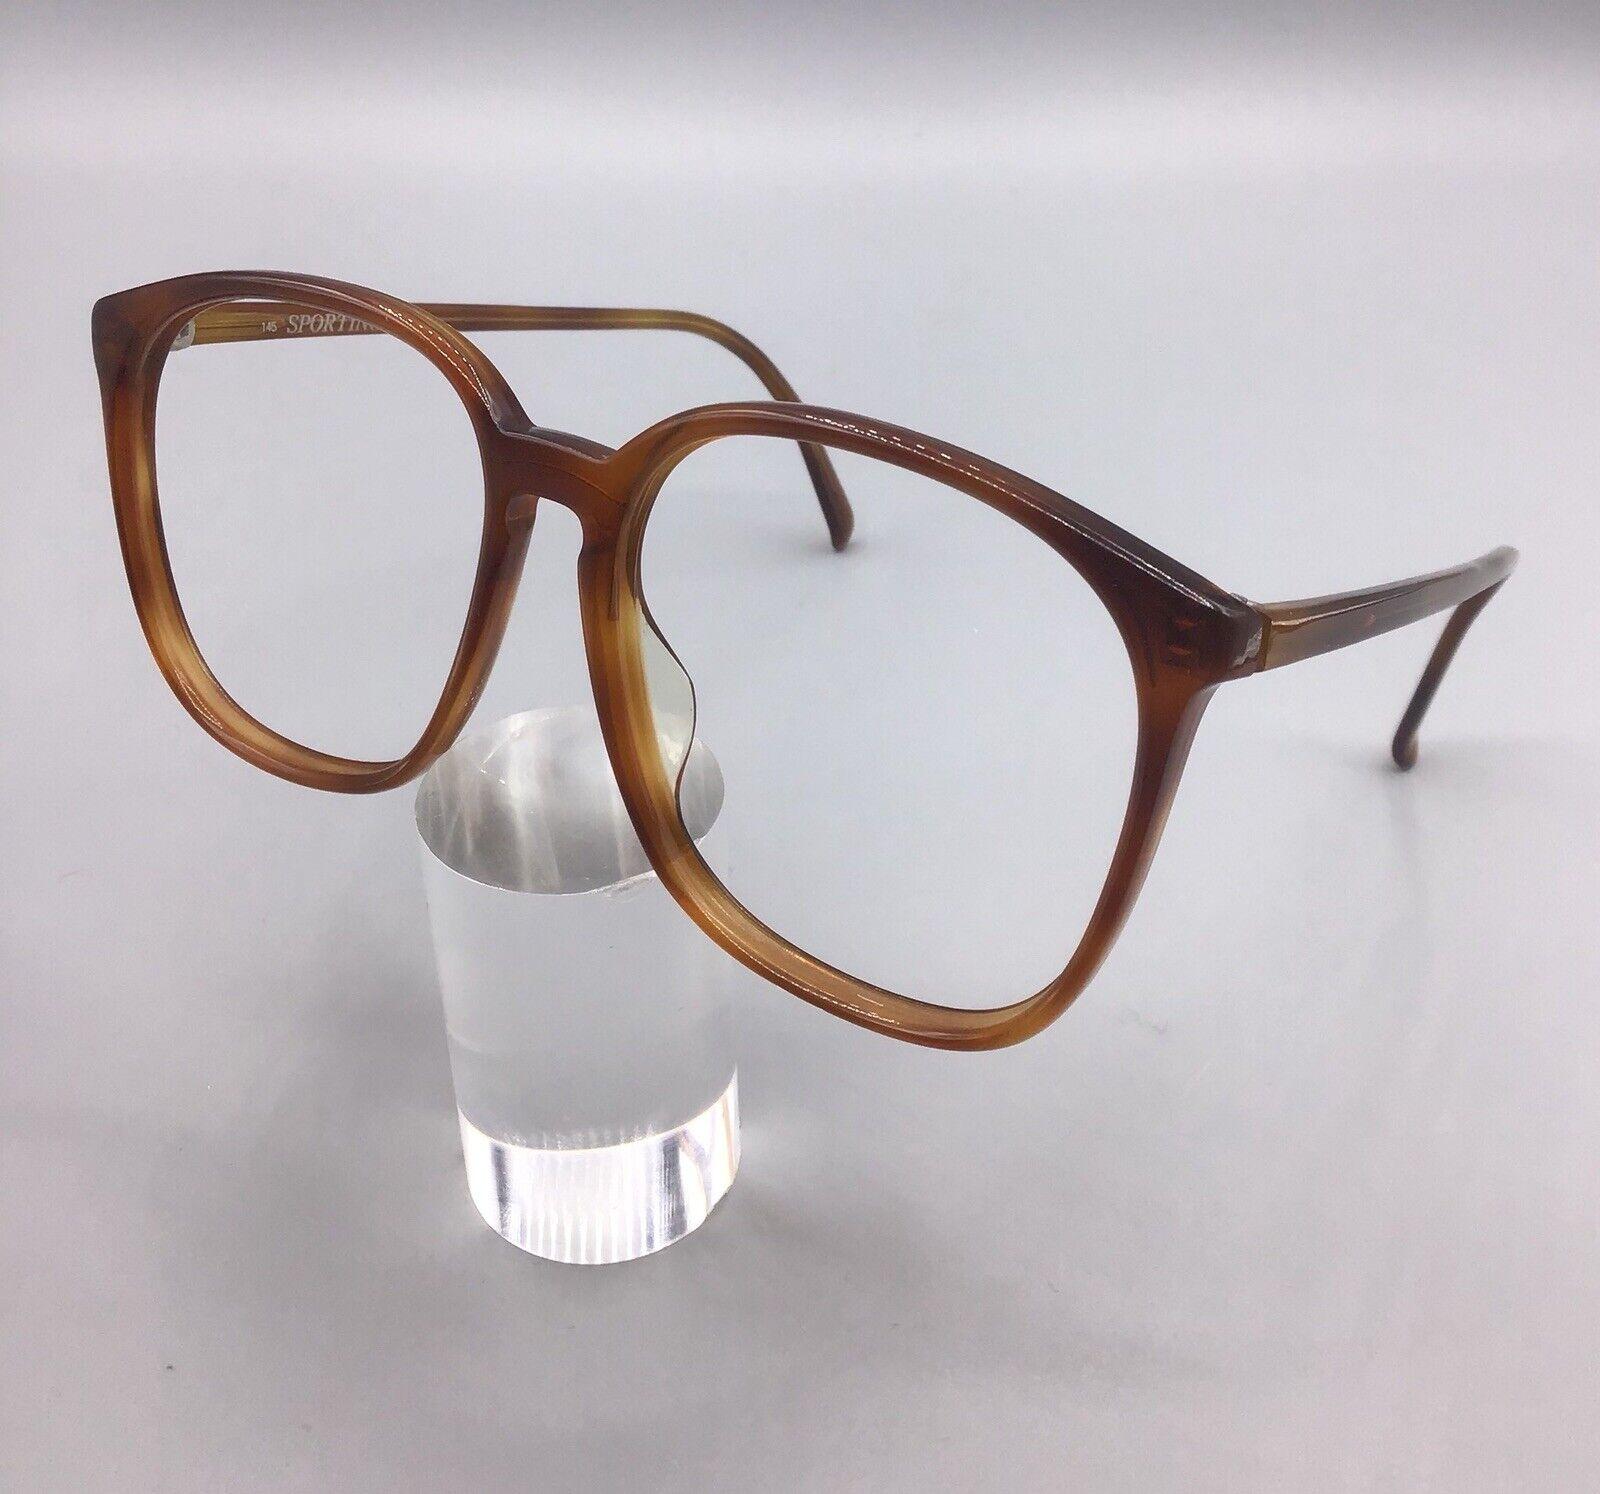 Safilo occhiale vintage eyewear italy sporting 208 056 brillen lunettes